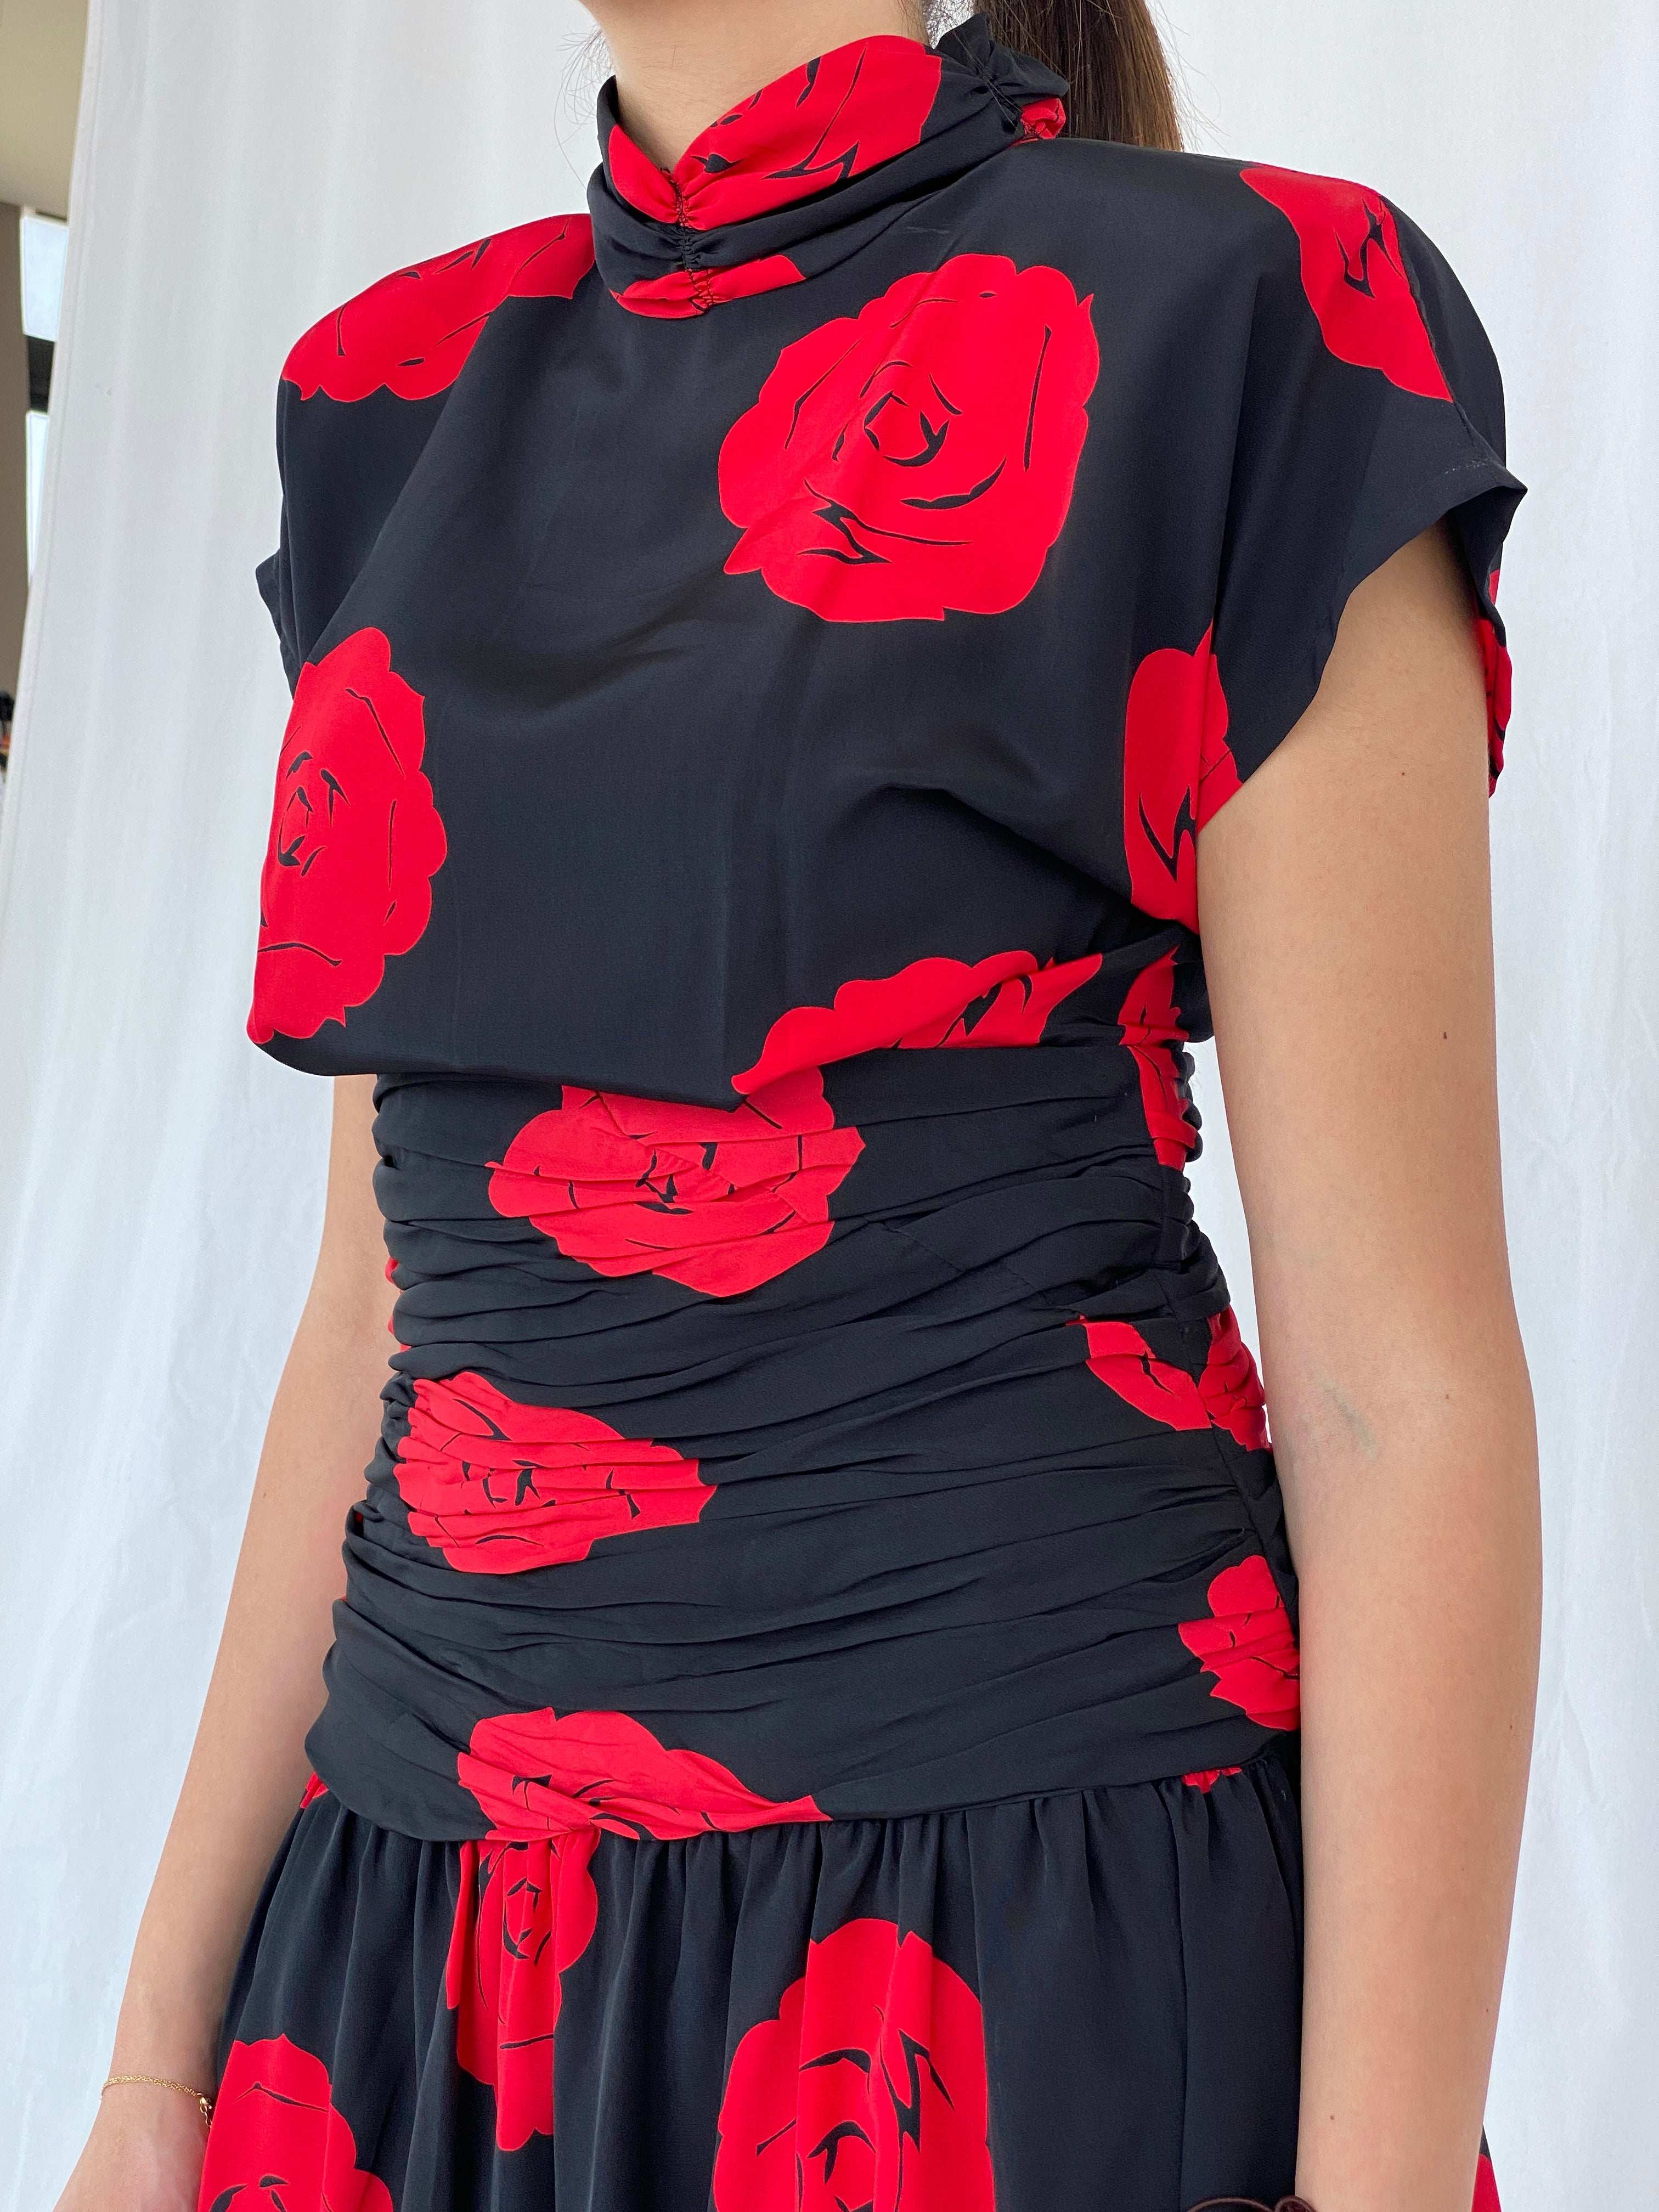 Stunning Vintage 80s Handmade Black Rose Print Midi Party Dress Size M - Balagan Vintage Midi Dress 90s, black dress, dress, floral dress, formal dress, Juana, midi dress, NEW IN